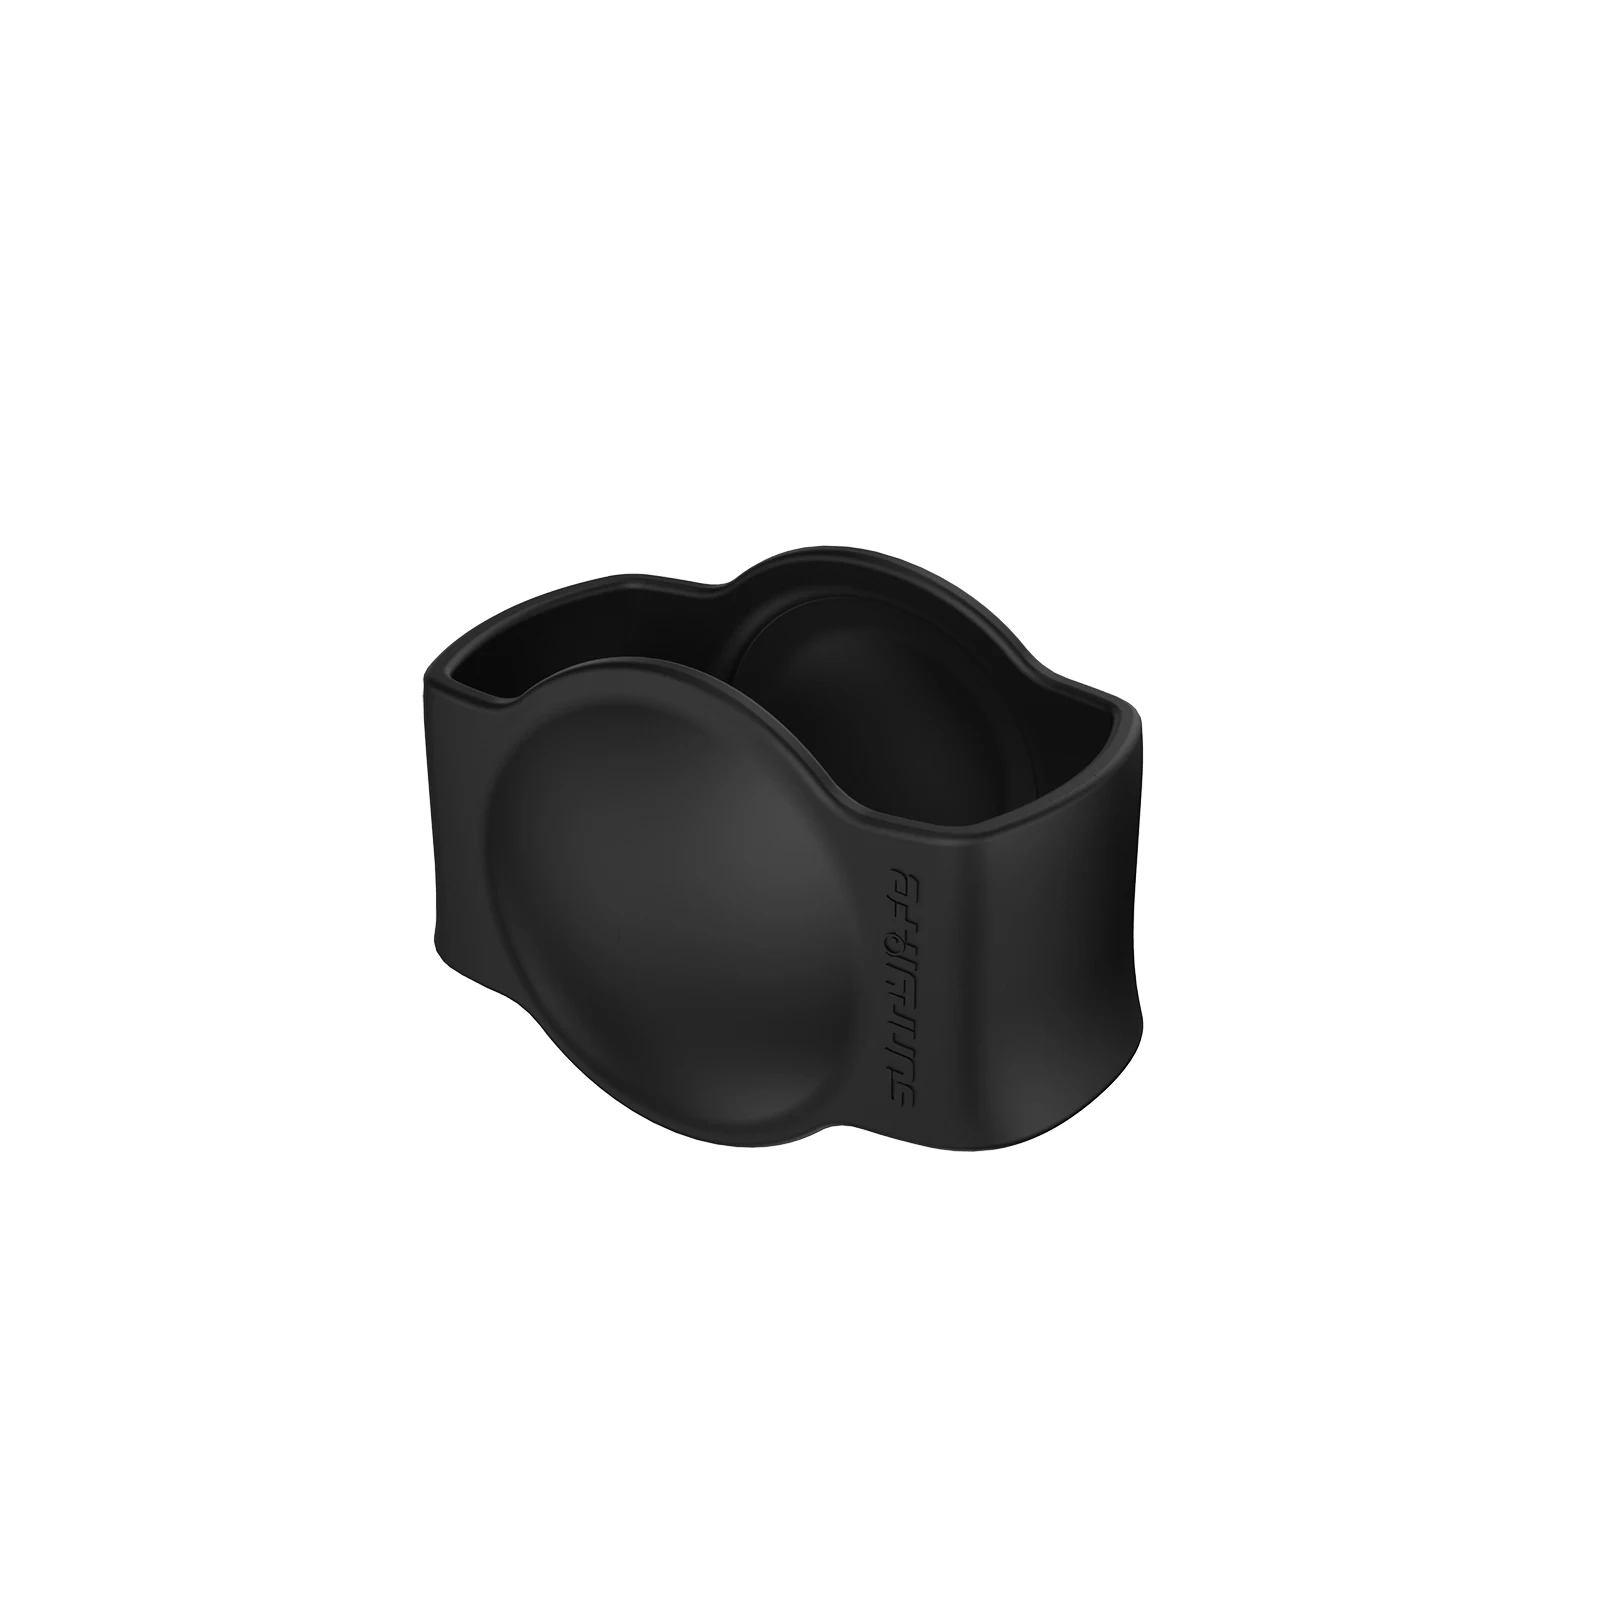 Купи For Insta360 X3 Protective Case Lens Body Silicone Anti-Scratch Protective Case Lanyard Accessories за 185 рублей в магазине AliExpress